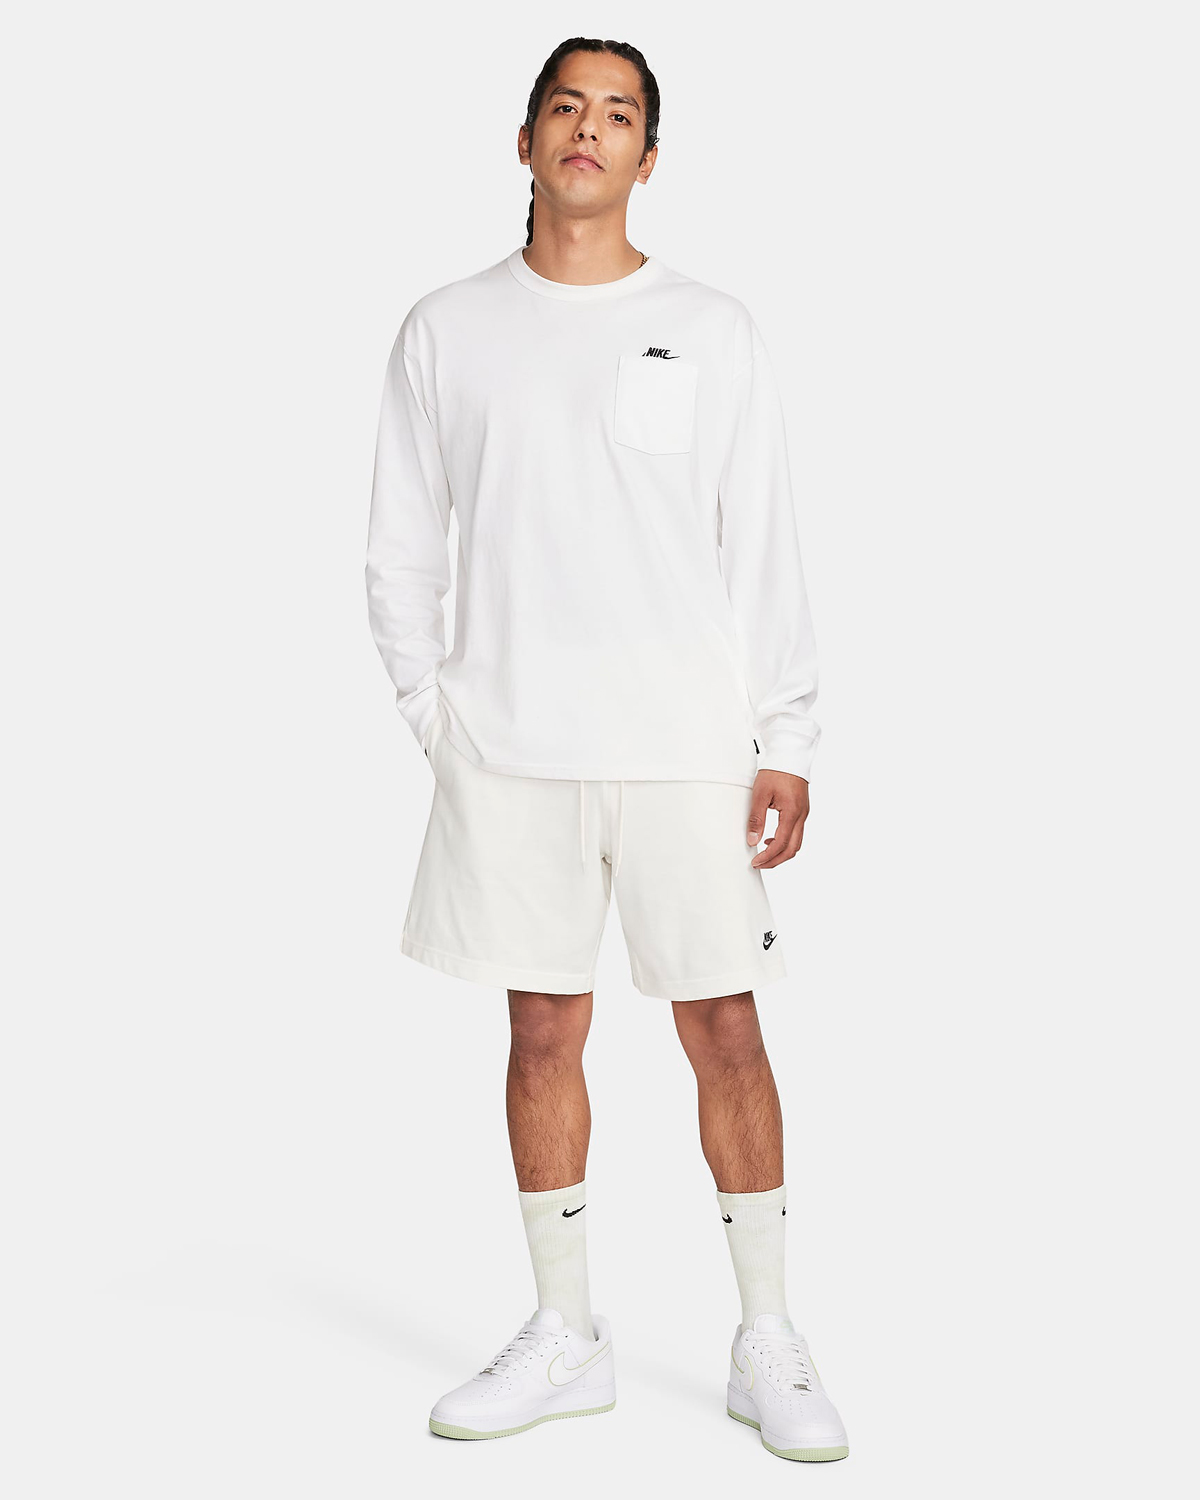 Nike-Club-Knit-Sail-Shorts-Outfit